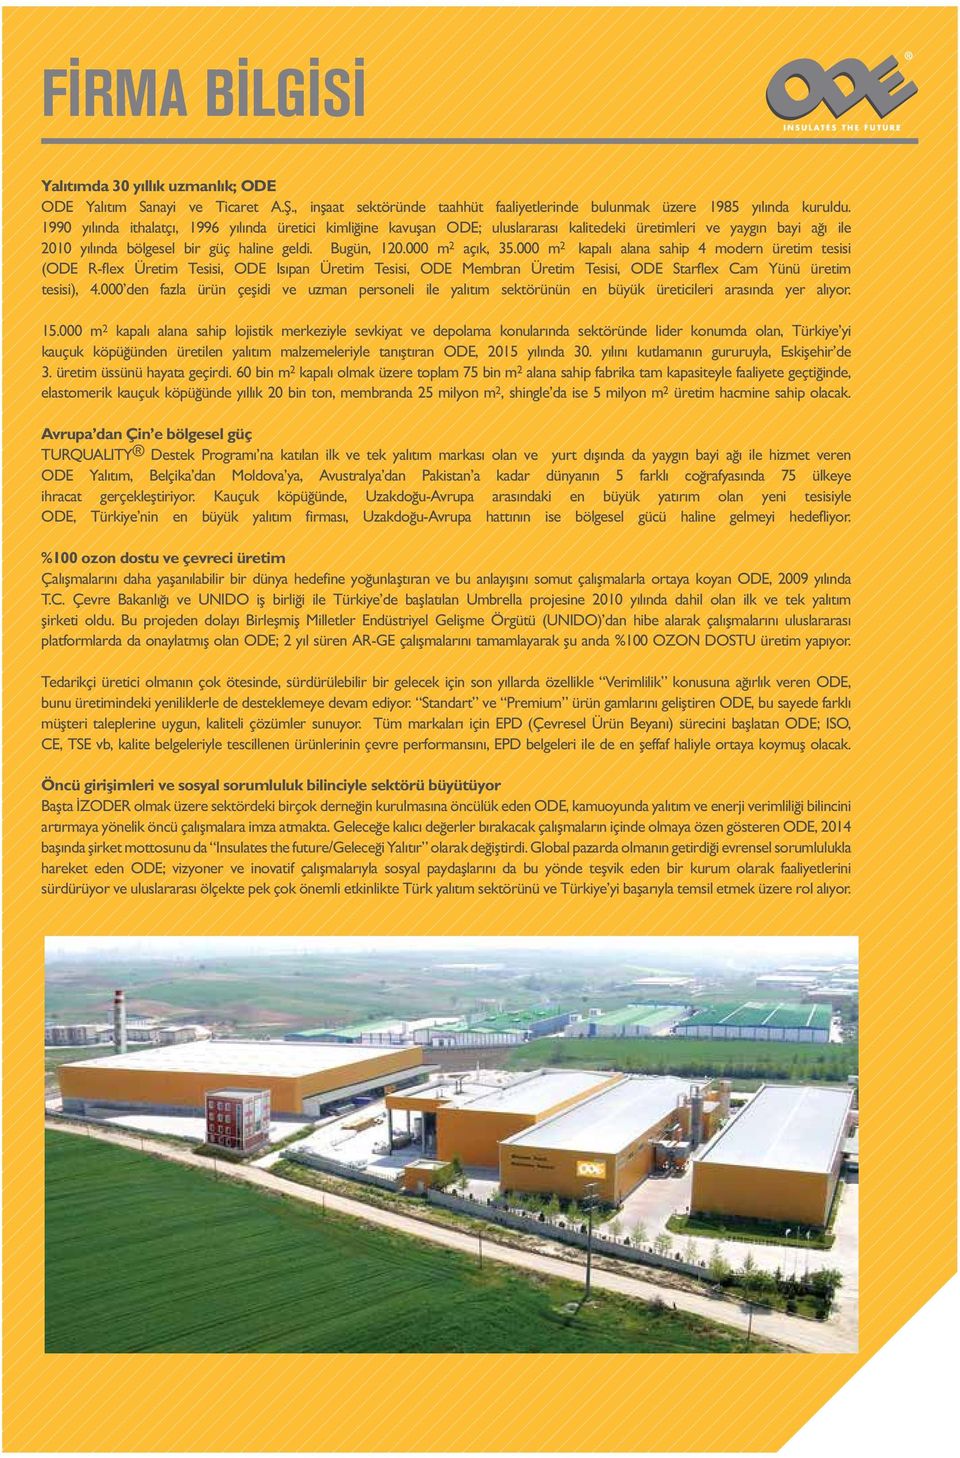 000 m 2 ² kapalı alana sahip 4 modern üretim tesisi (ODE R-flex Üretim Tesisi, ODE Isıpan Üretim Tesisi, ODE Membran Üretim Tesisi, ODE Starflex Cam Yünü üretim tesisi), 4.